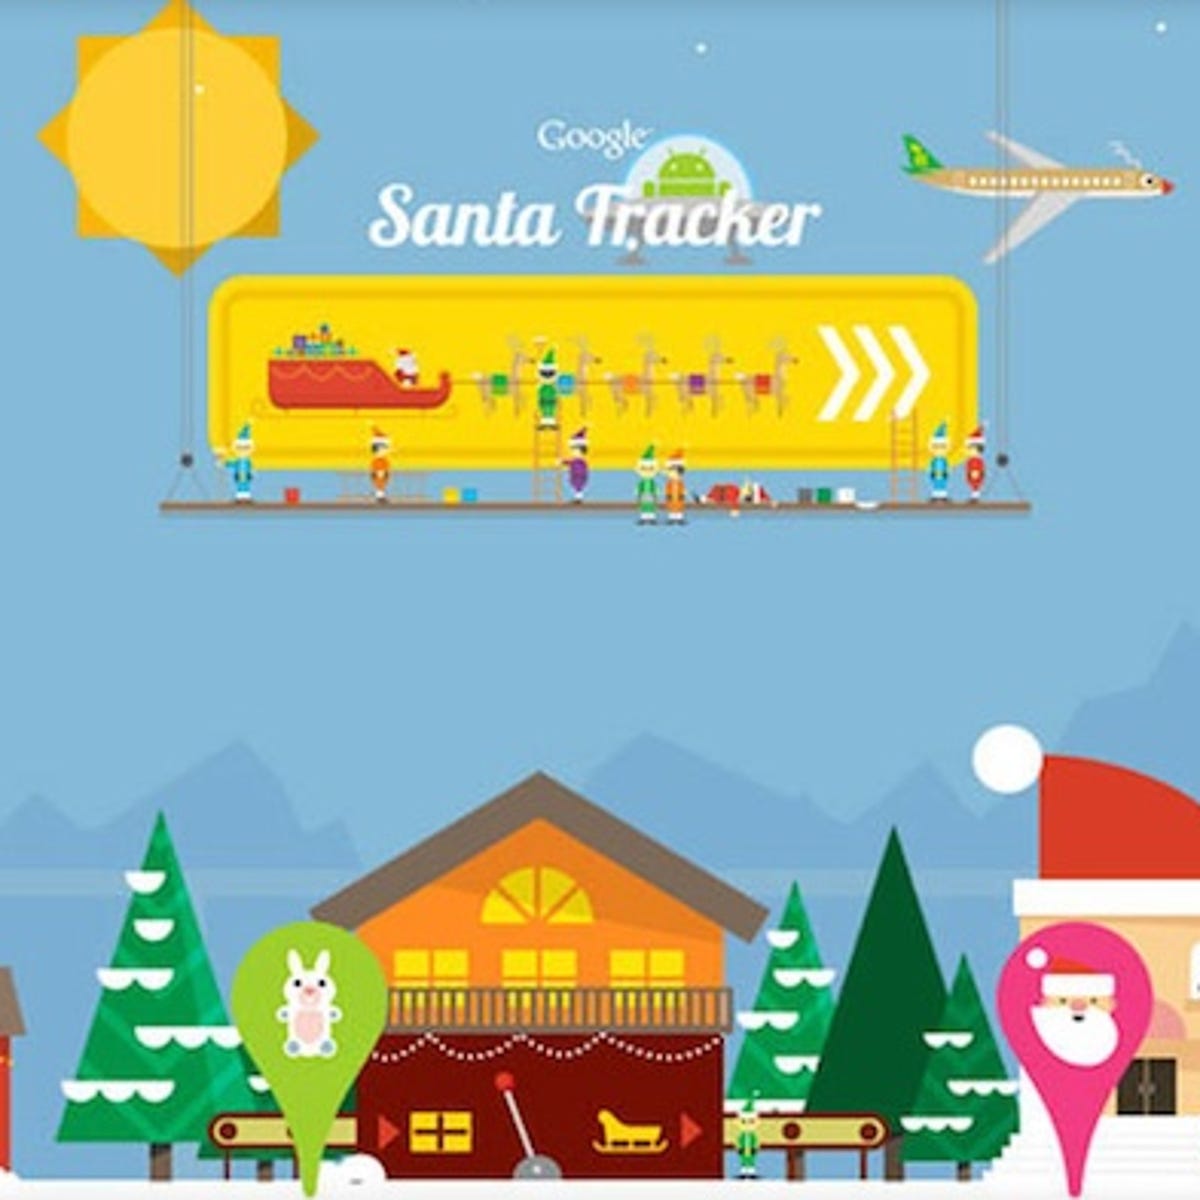 Google santa tracker